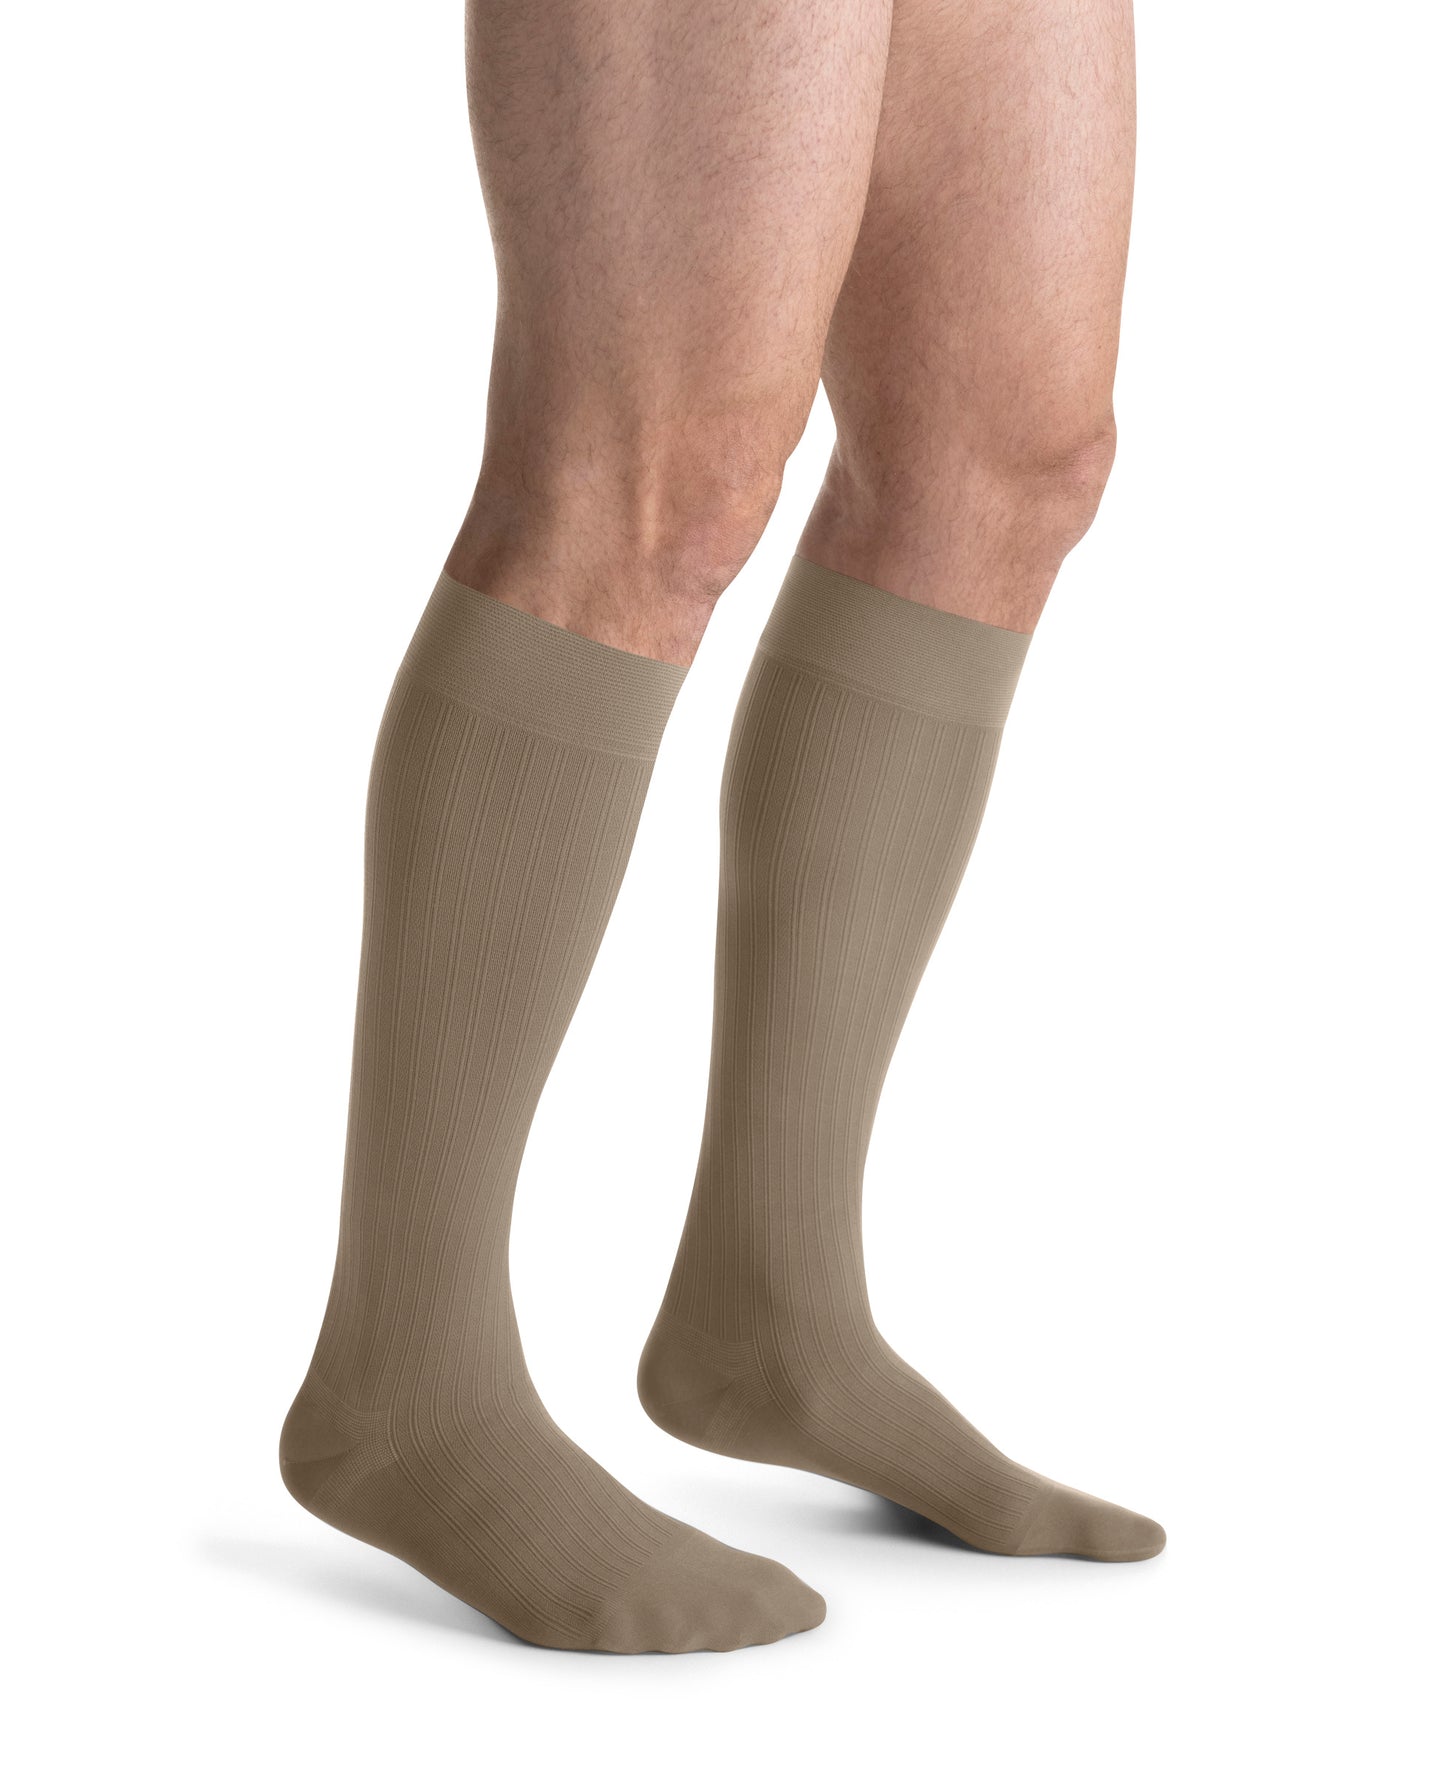 JOBST forMen Ambition Compression Socks 30-40 mmHg Knee High SoftFit Band Closed Toe